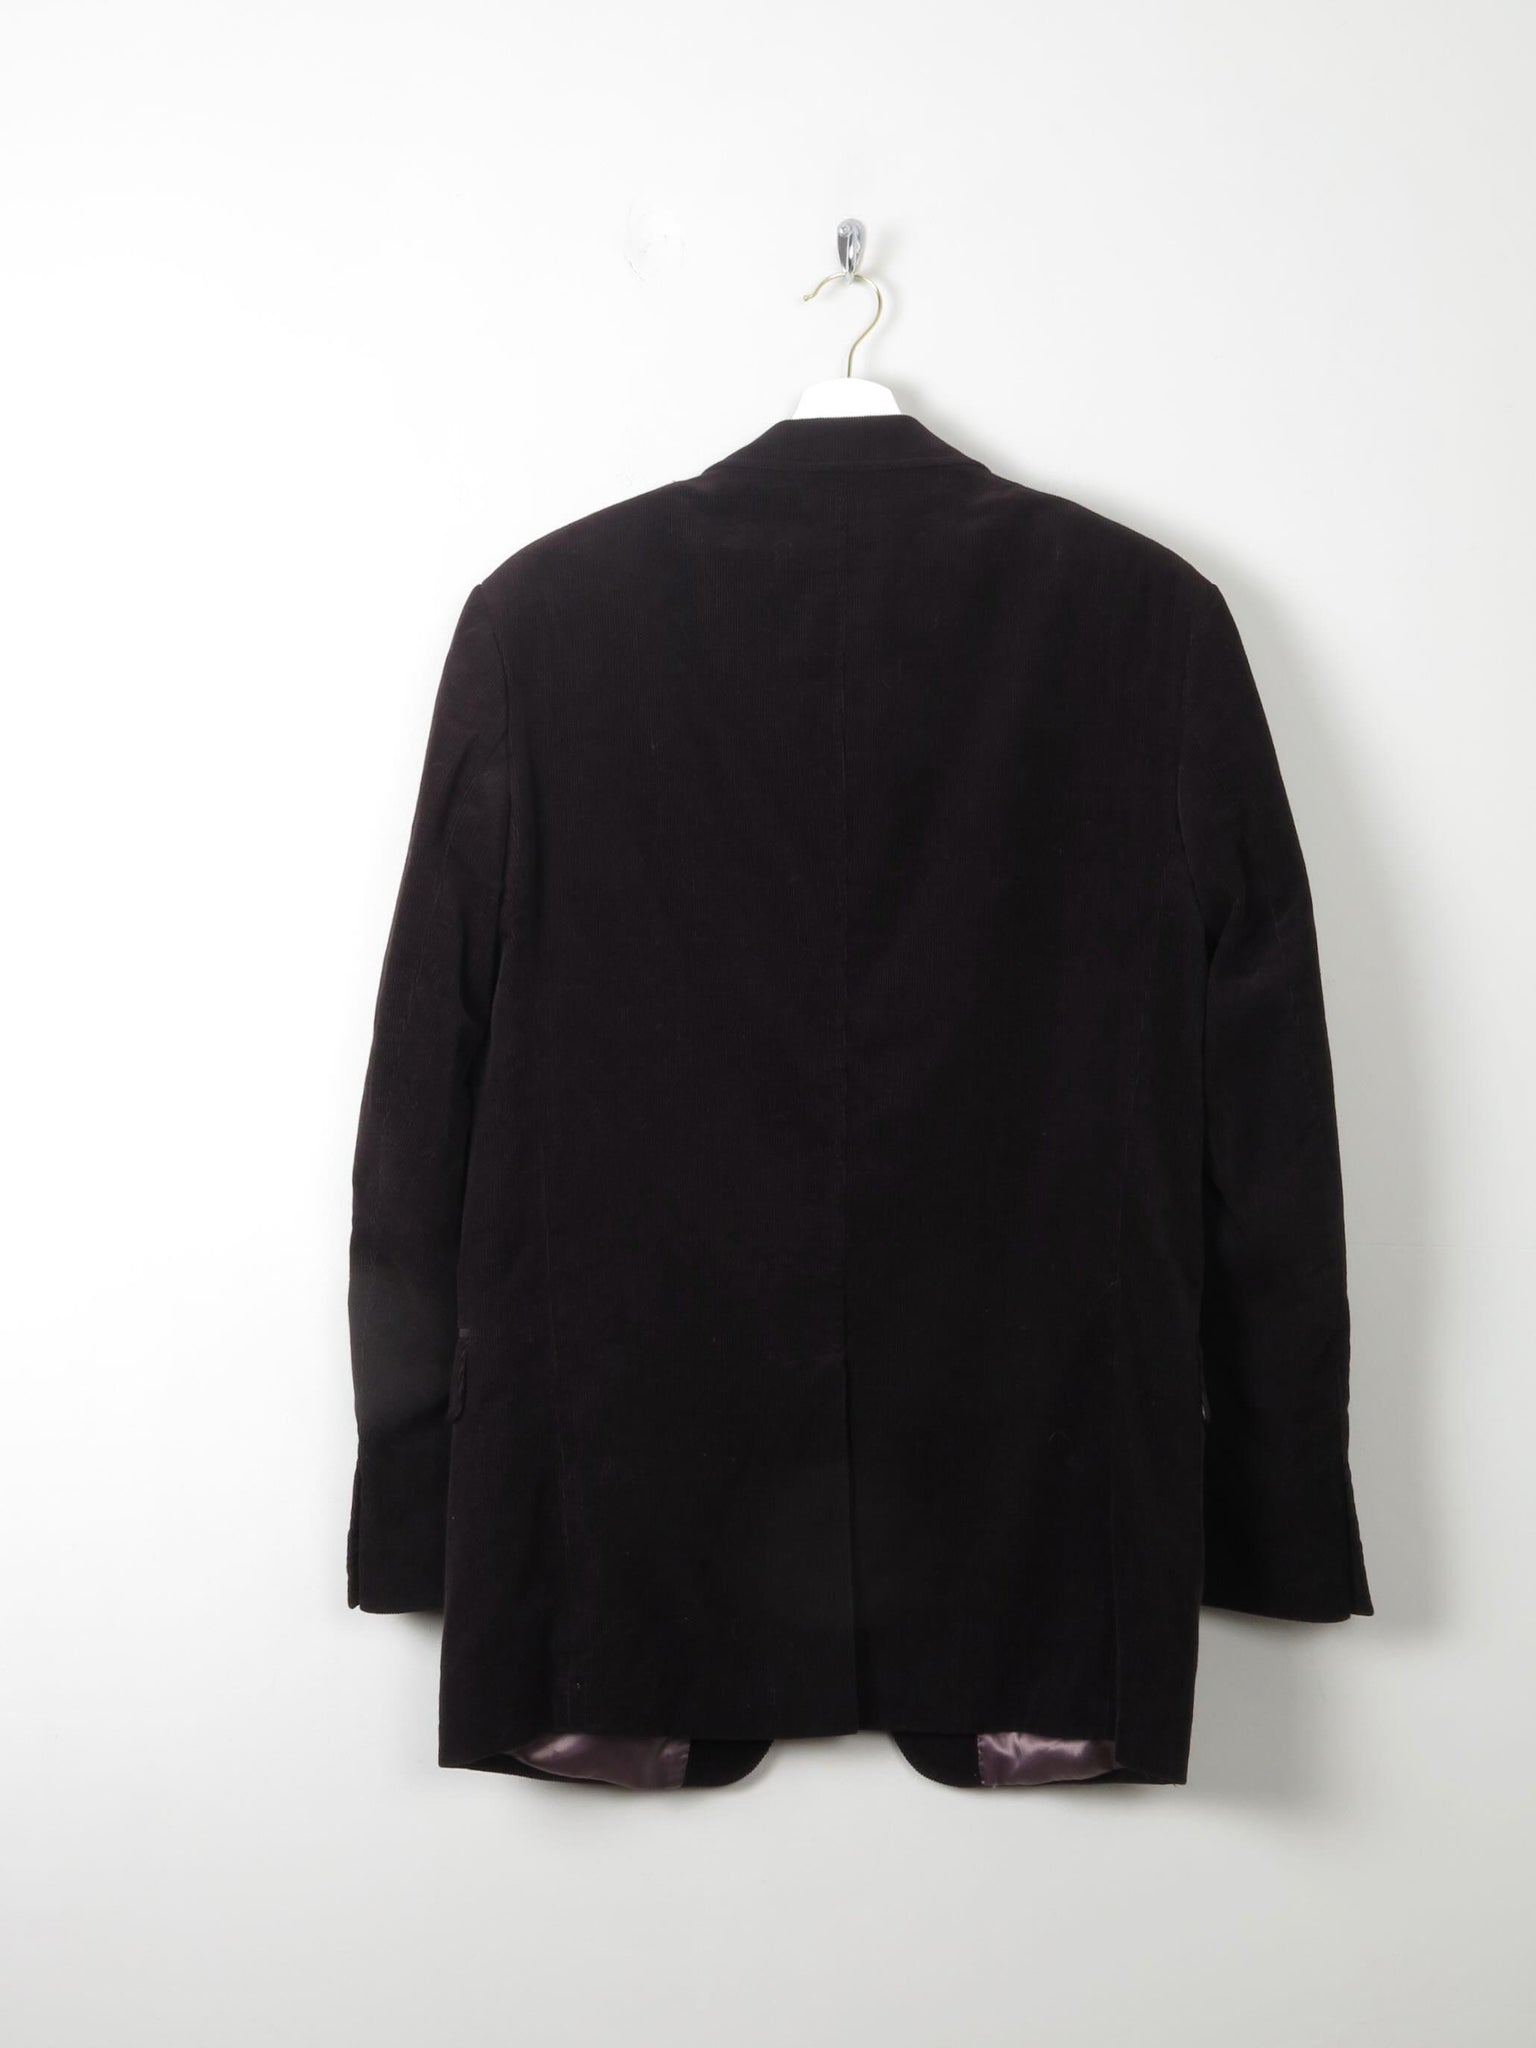 Men's Vintage Style Black Corduroy Jacket S - The Harlequin